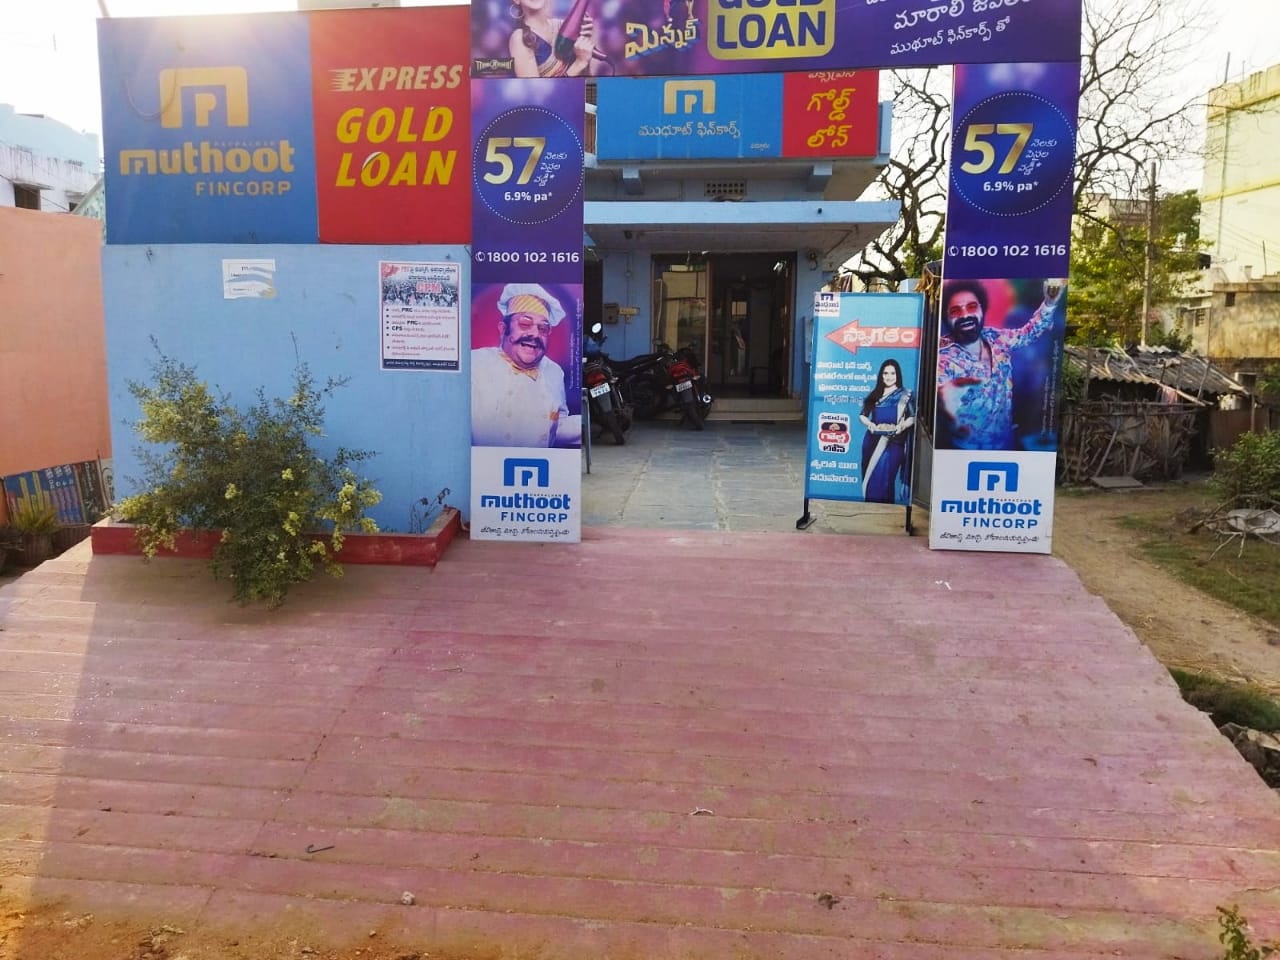 Muthoot Fincorp Gold Loan Services in Parchur, Prakasam, Andhra Pradesh